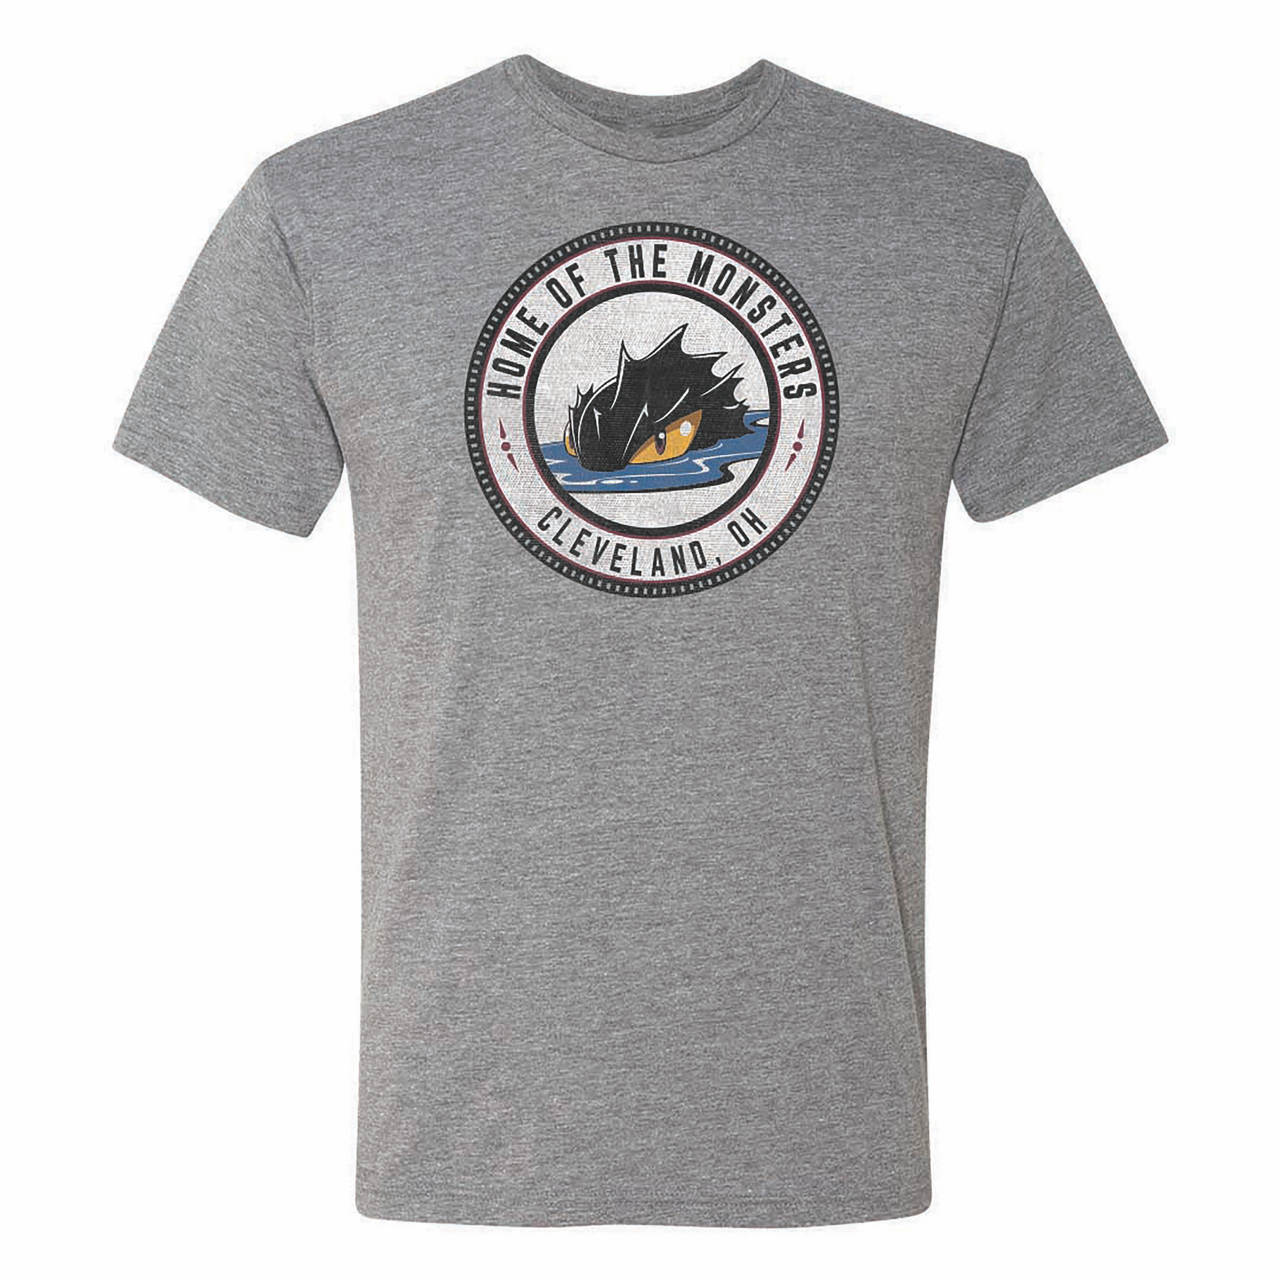 108 Stitches Cleveland Monsters Puck Decal Short Sleeve T-Shirt (Sidewalk Sale, Medium)